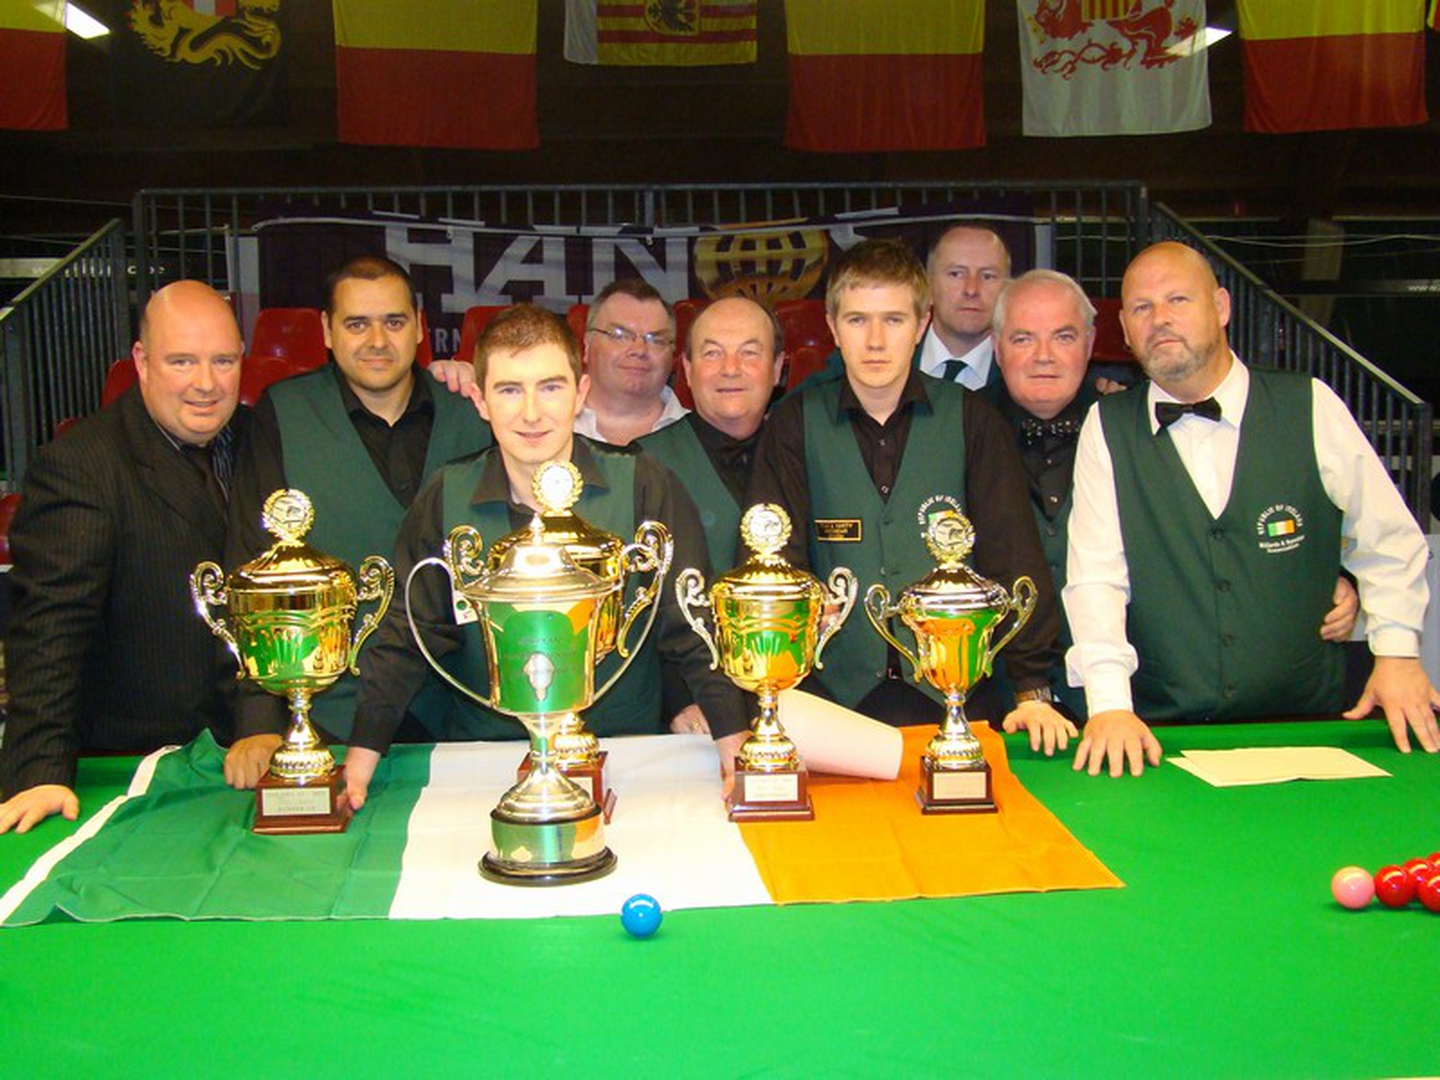 Irelands Hogan wins European Championship